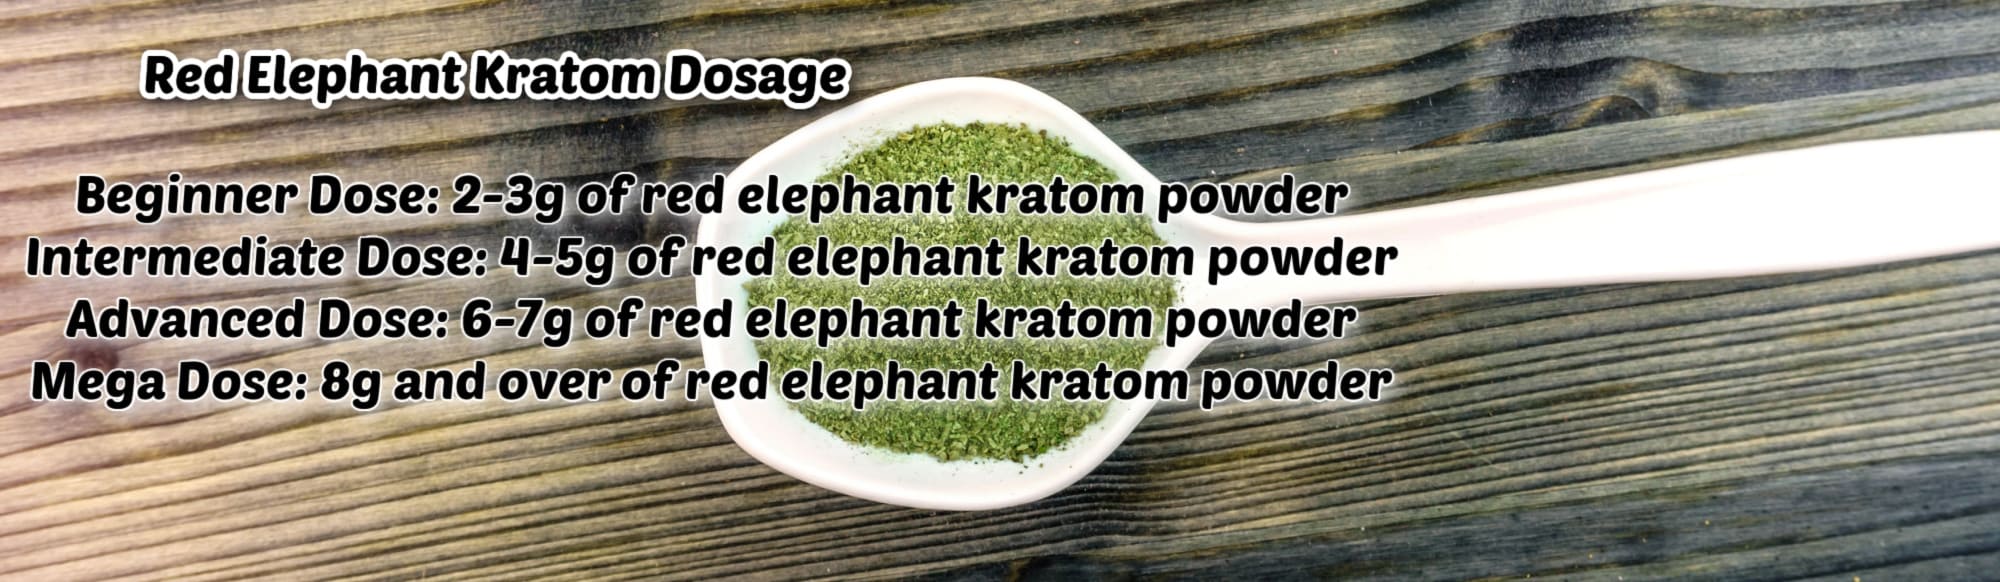 image of red elephant kratom dosage